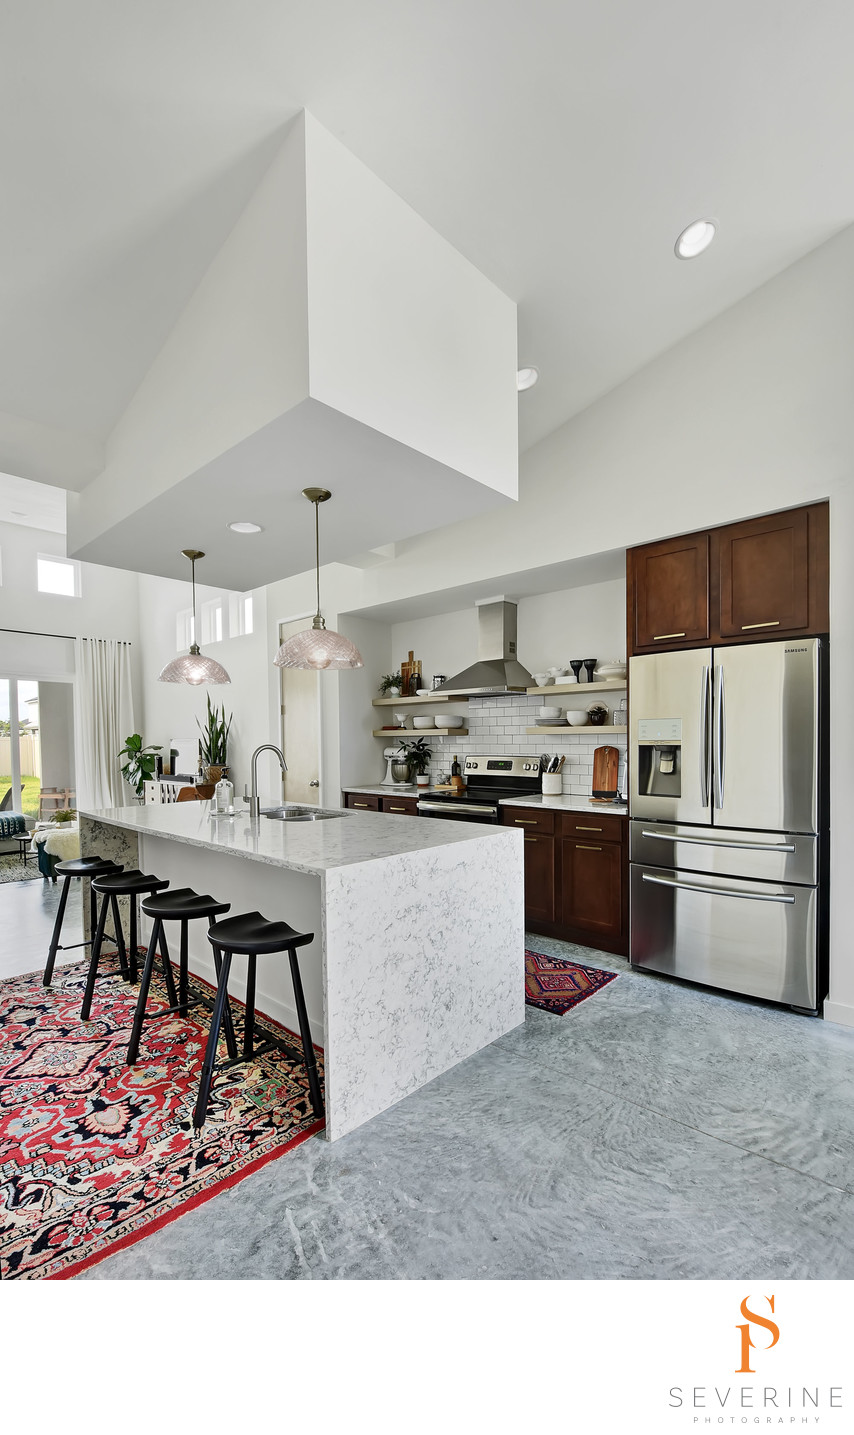 White kitchen with boho interior designer